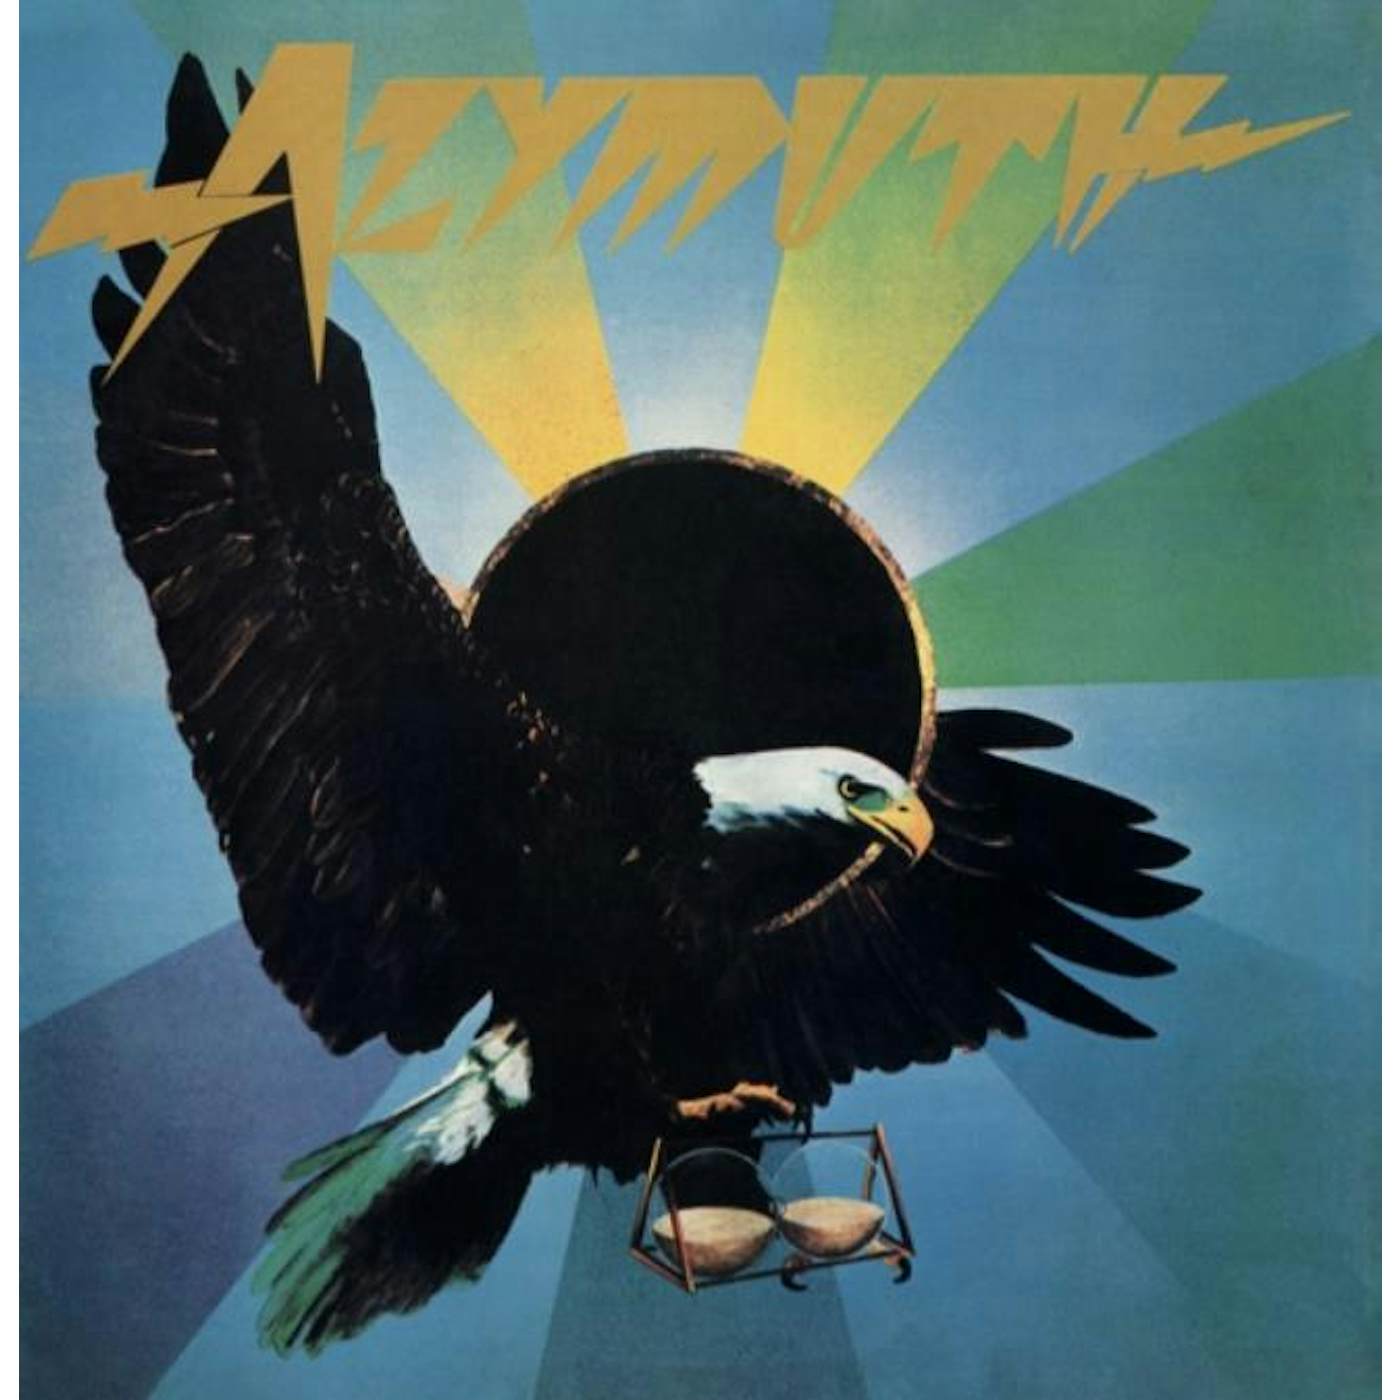 Azymuth AGUIA NAO COME MOSCA Vinyl Record